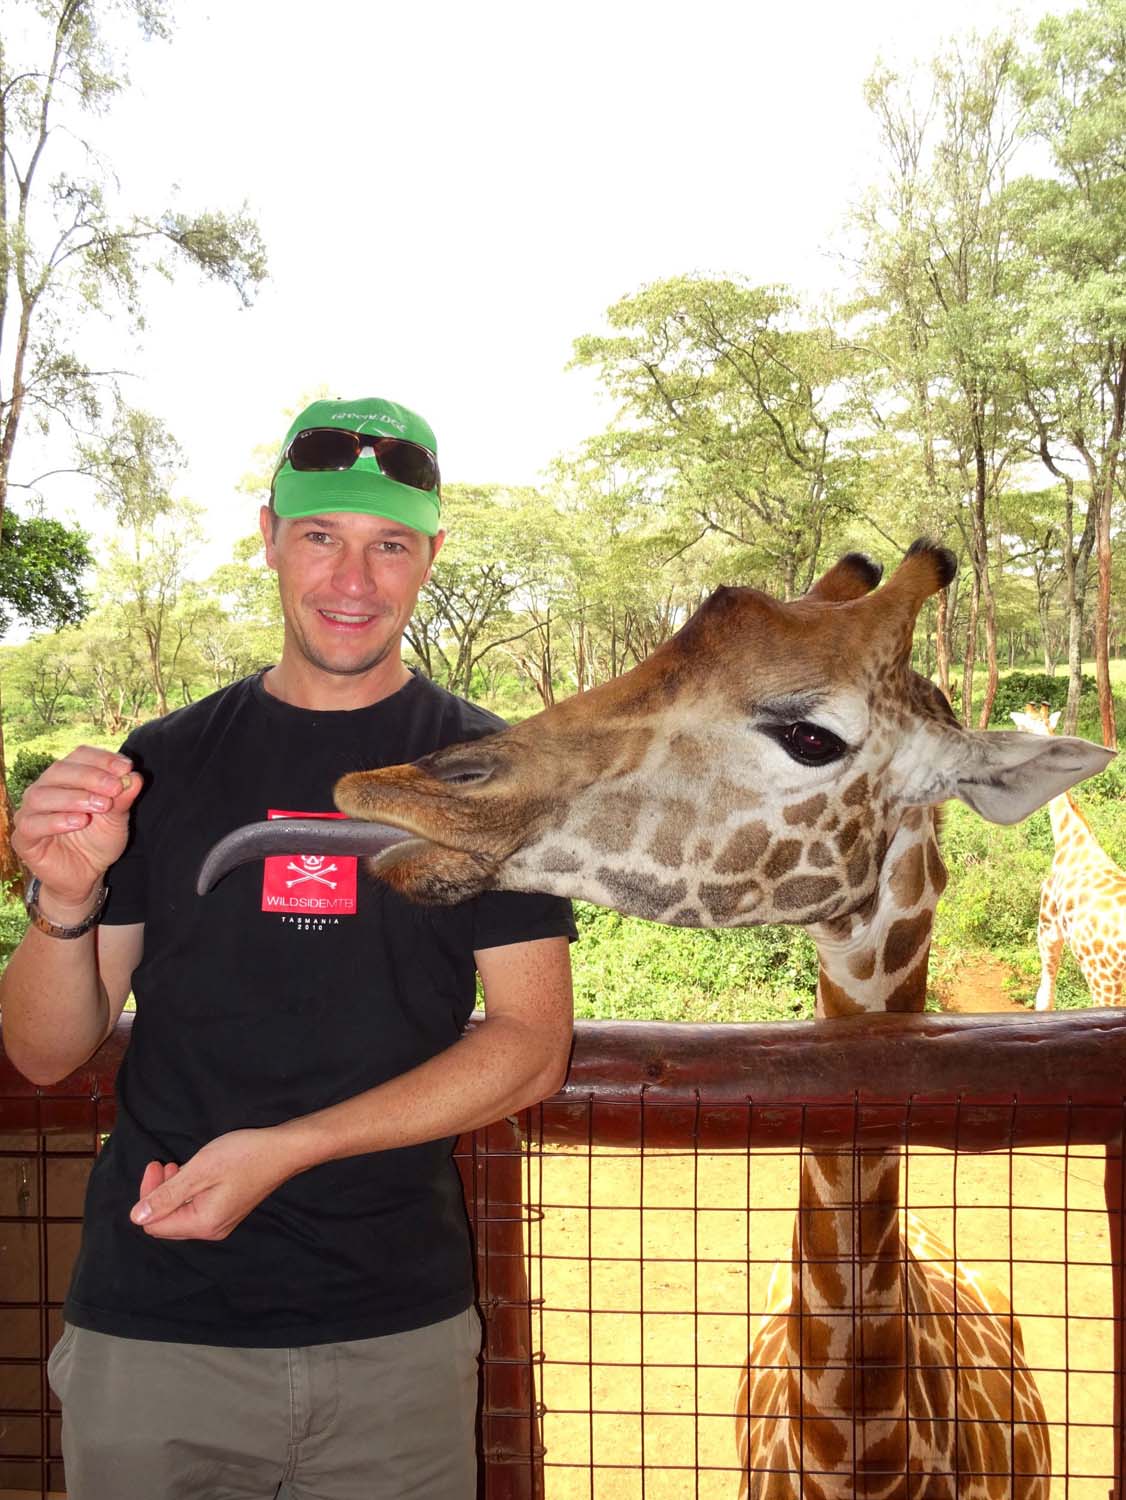 average length of a giraffe tongue is 45cm...!